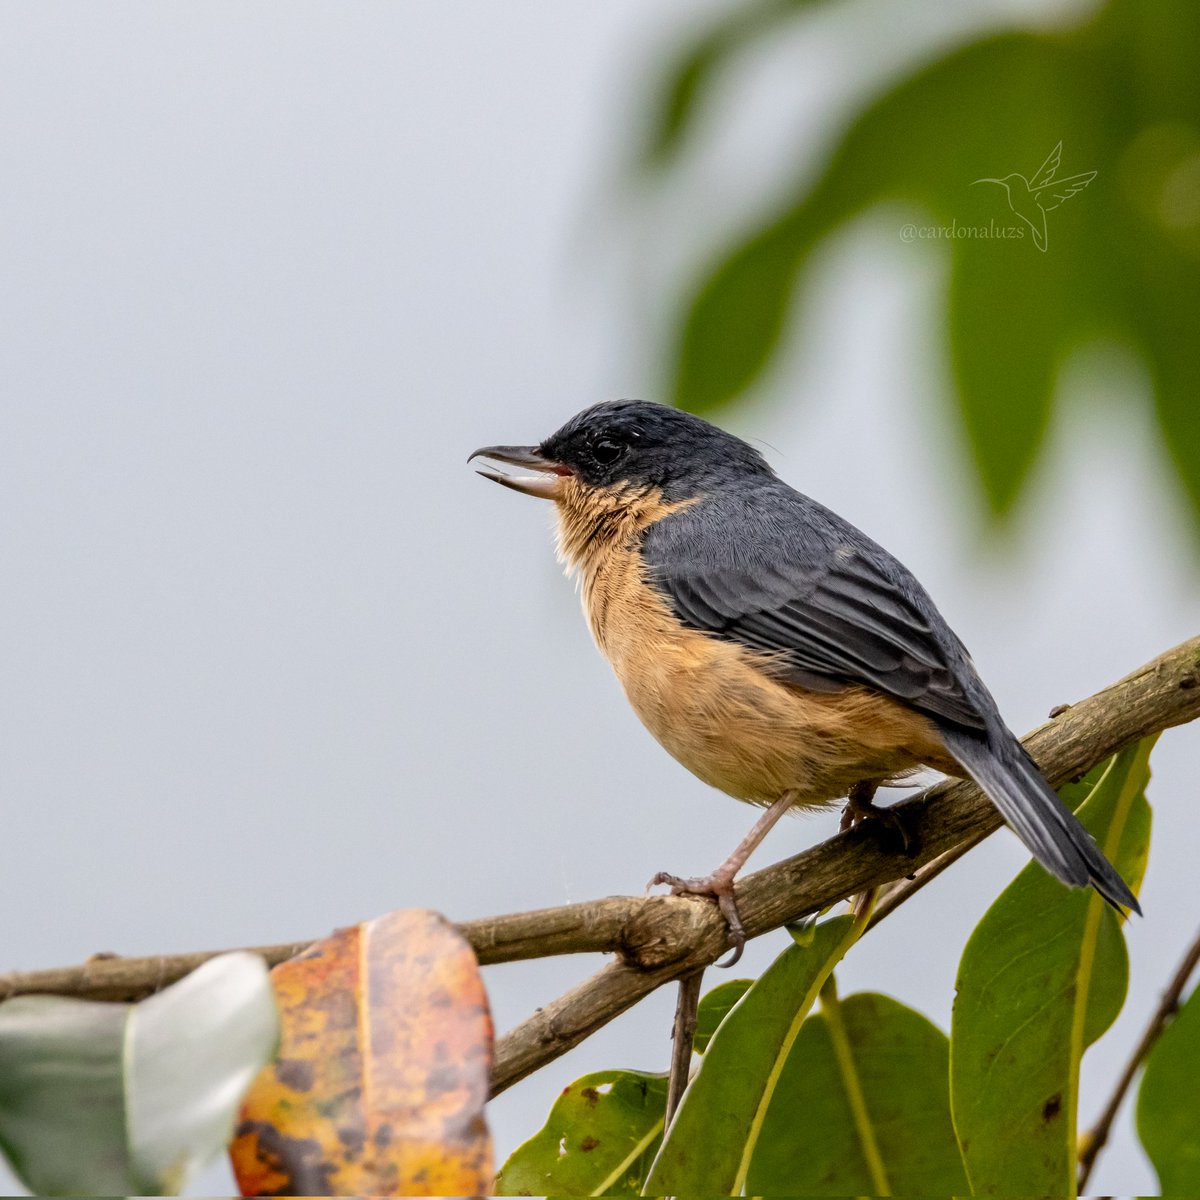 #miercolesdeemplumados 

🇨🇴Picaflor canela ♂️
🔬Diglossa sittoides

#nature 
#birds 
#avesdecolombia